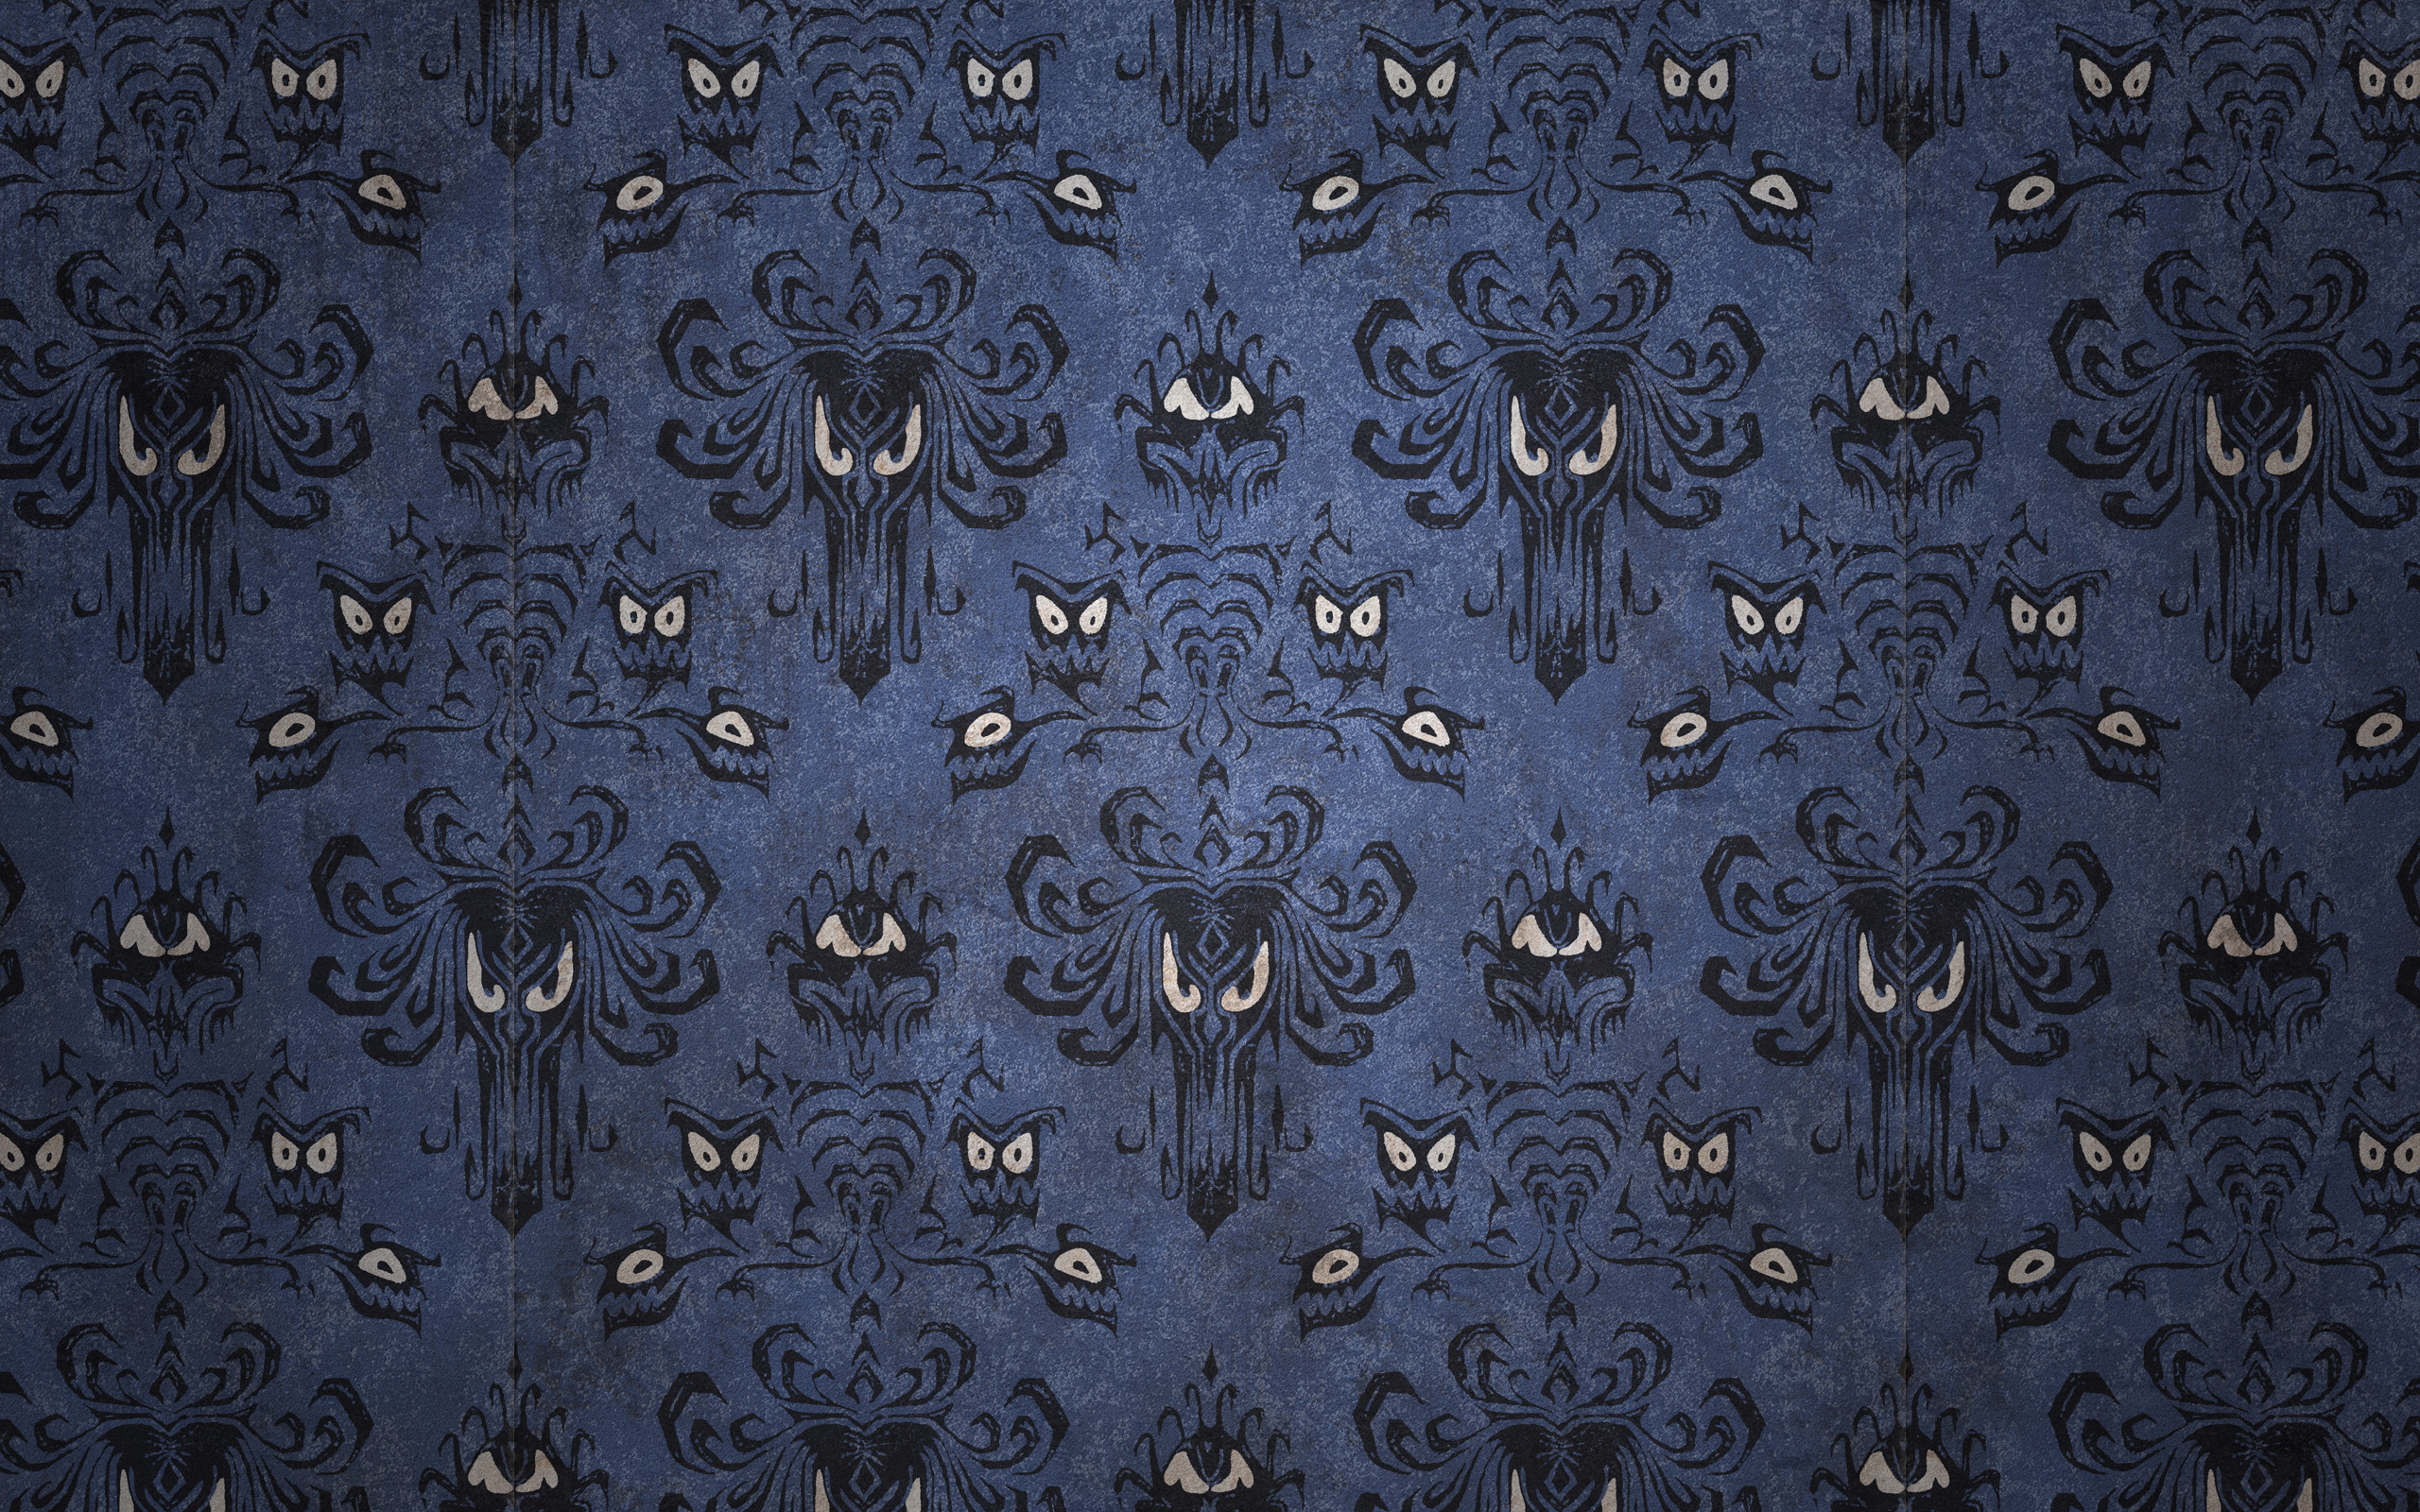 2560x1600 Haunted Mansion - Eerie Eyes Wallpaper by louiemantia on deviantART